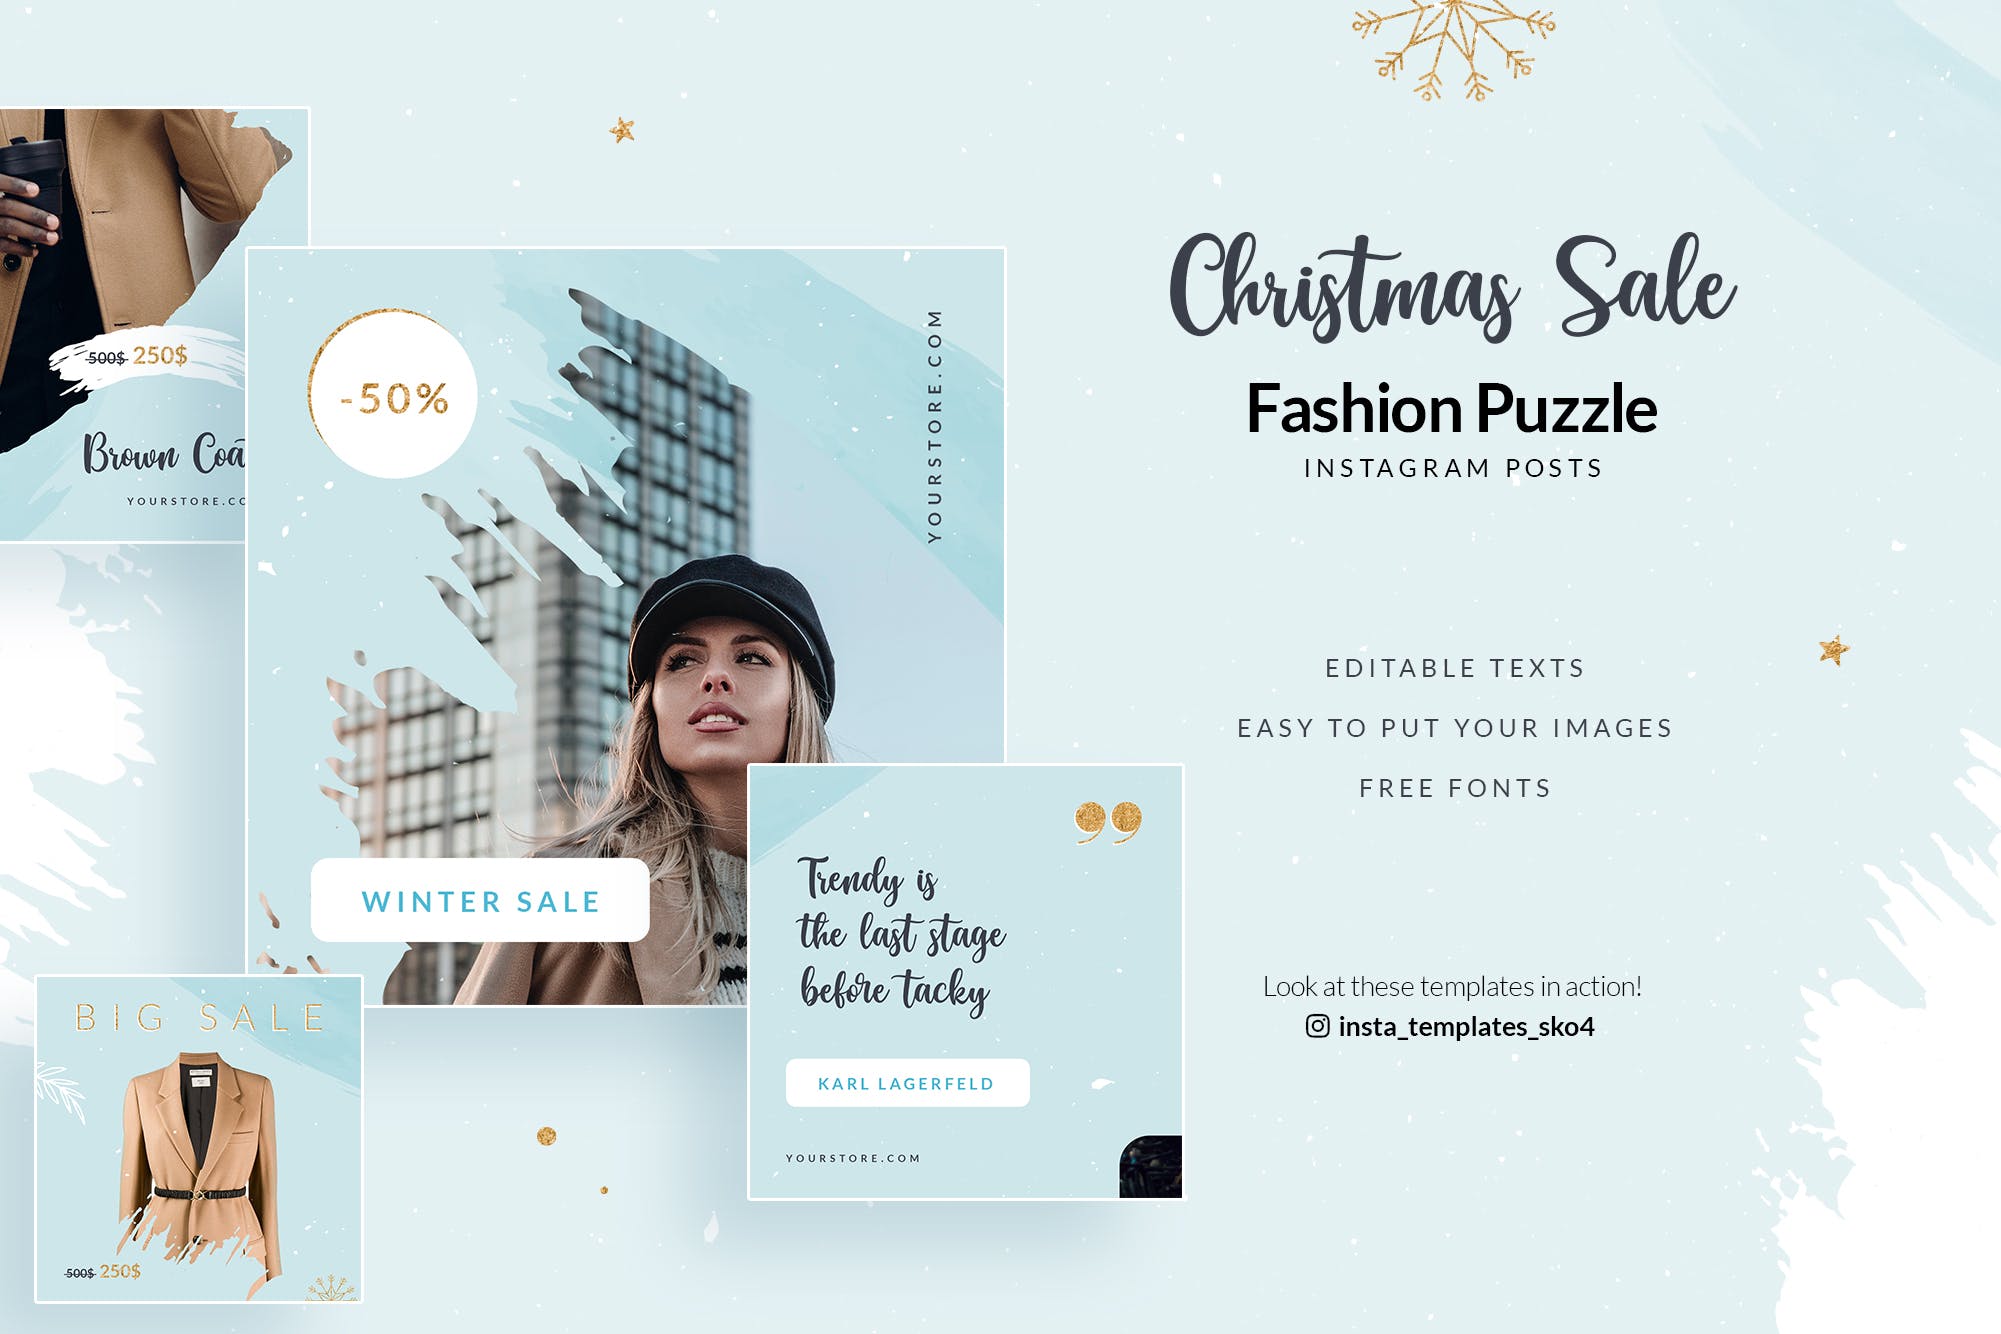 圣诞节时尚促销广告Instagram拼图风格设计模板第一素材精选 Christmas Fashion Sale – Instagram Puzzle插图(2)